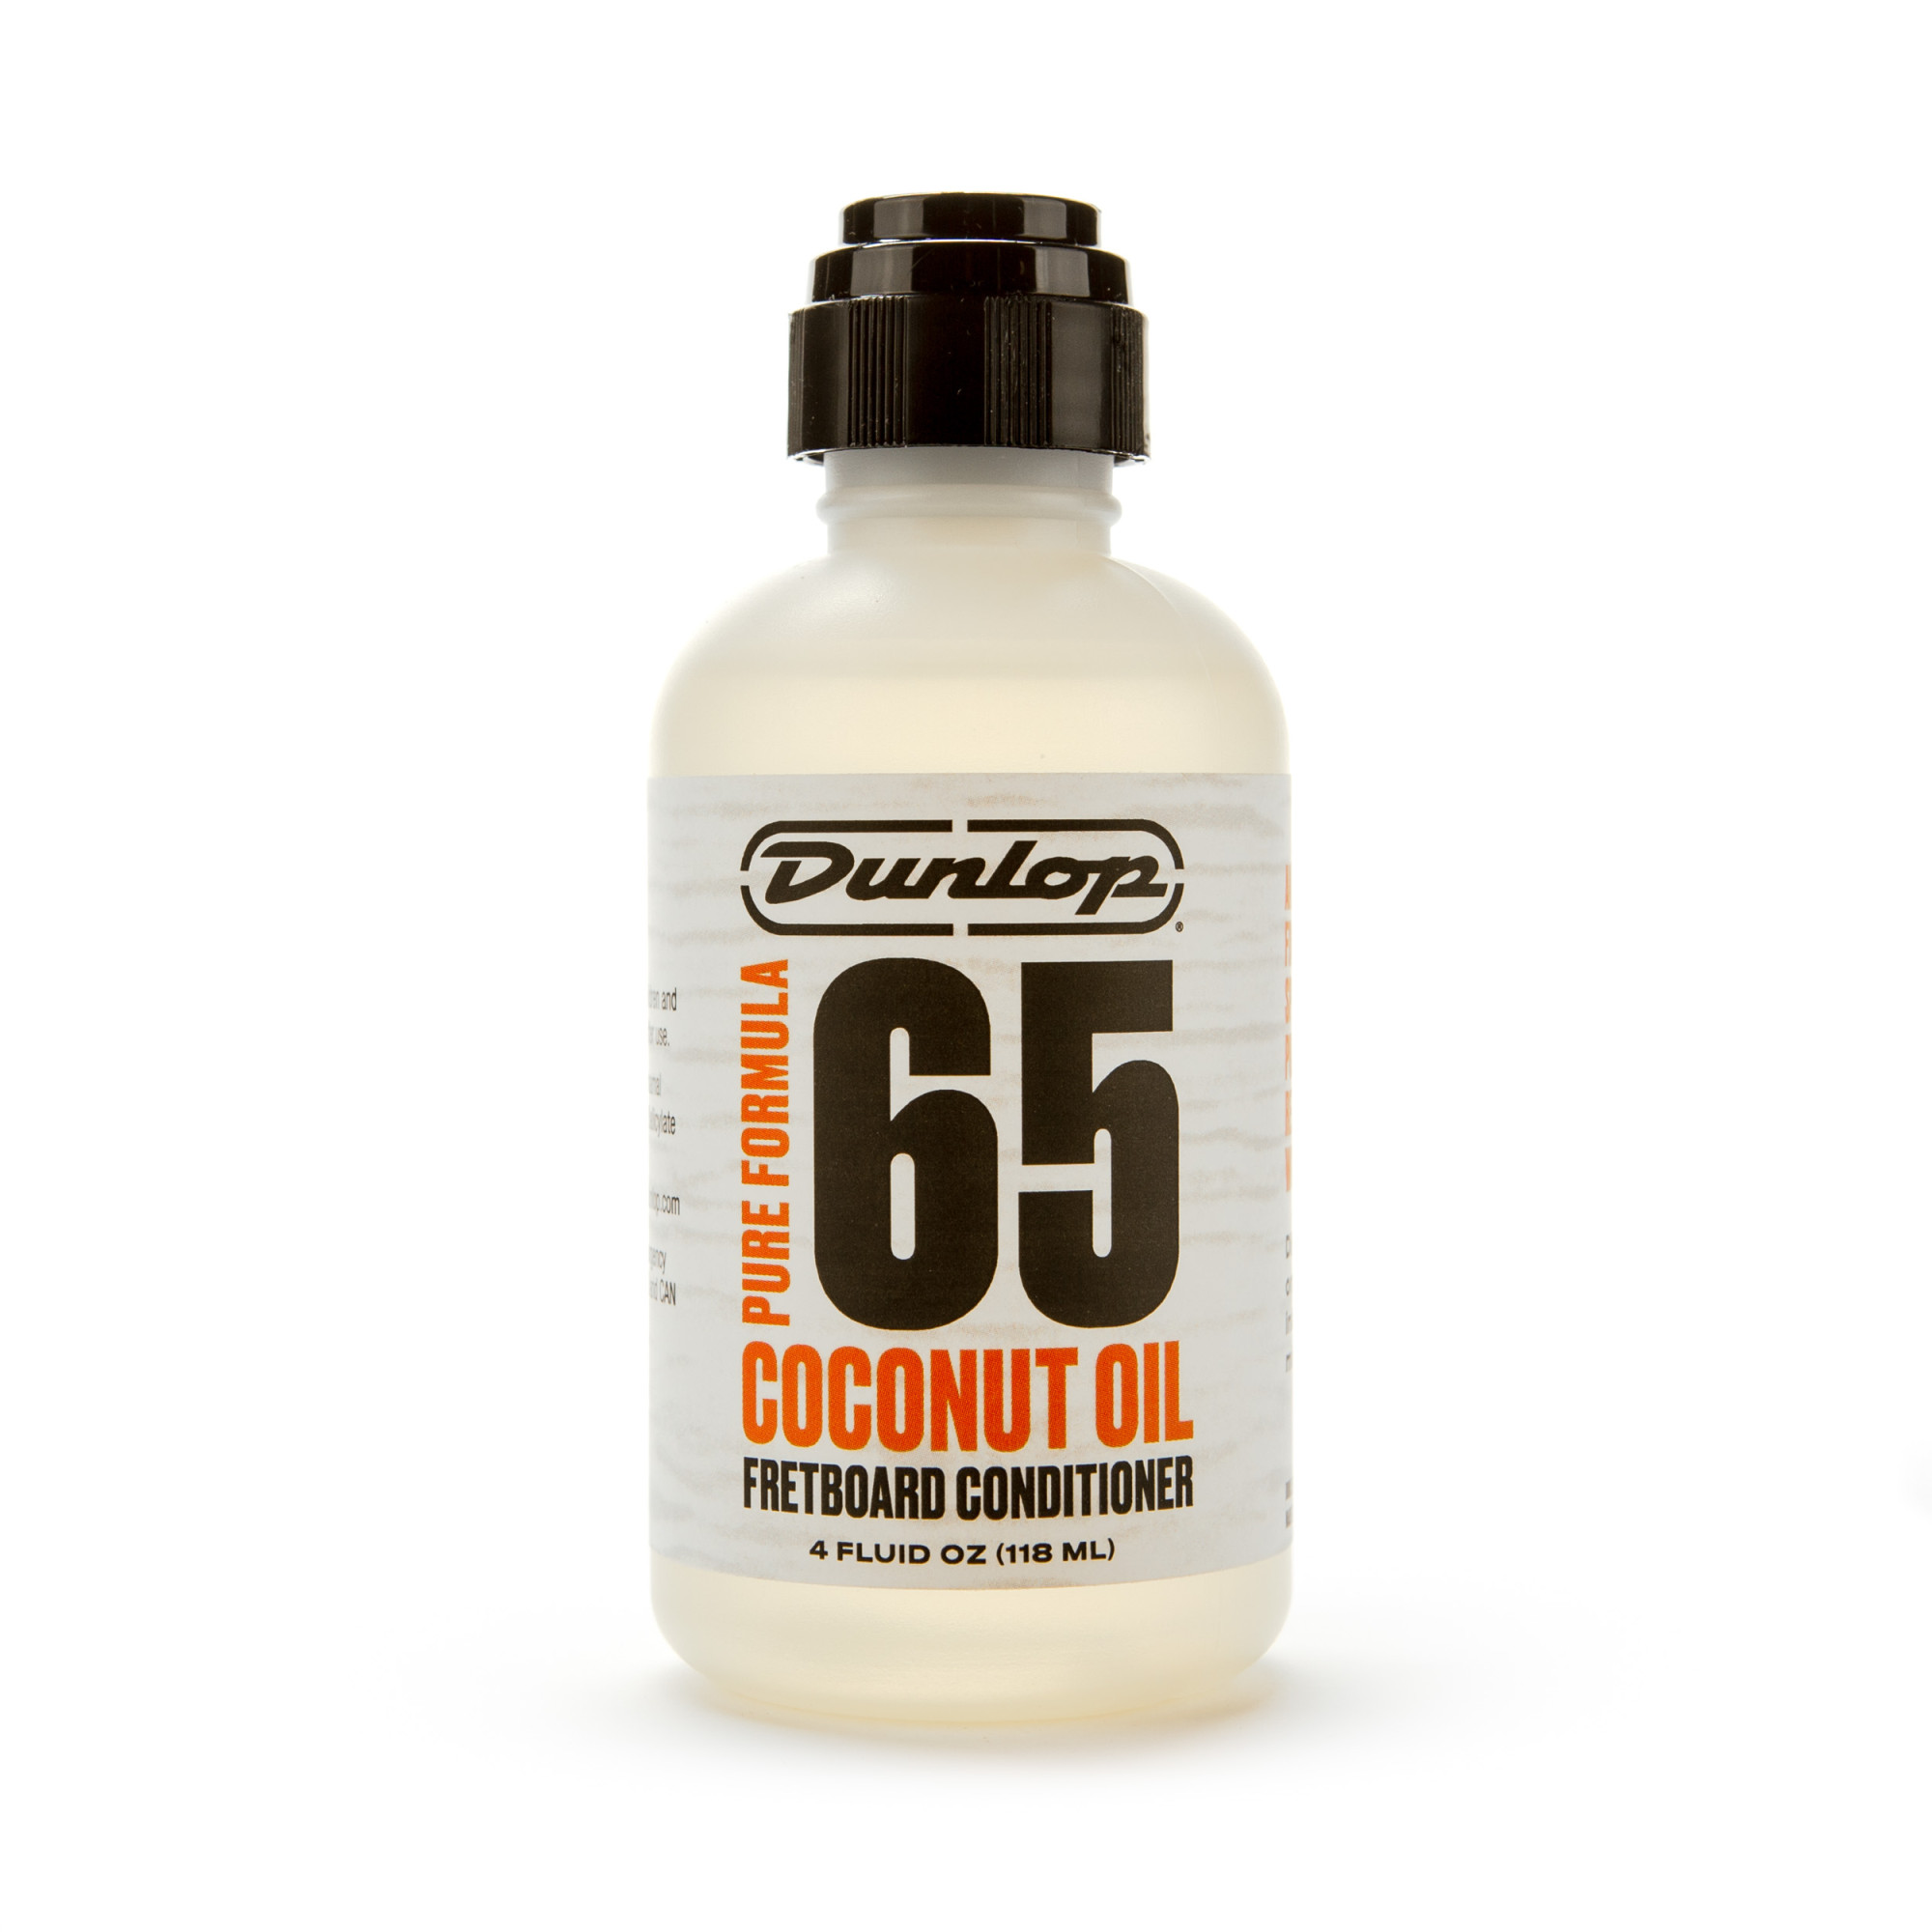 Dunlop 65 Coconut Oil Fretboard Conditioner 4oz